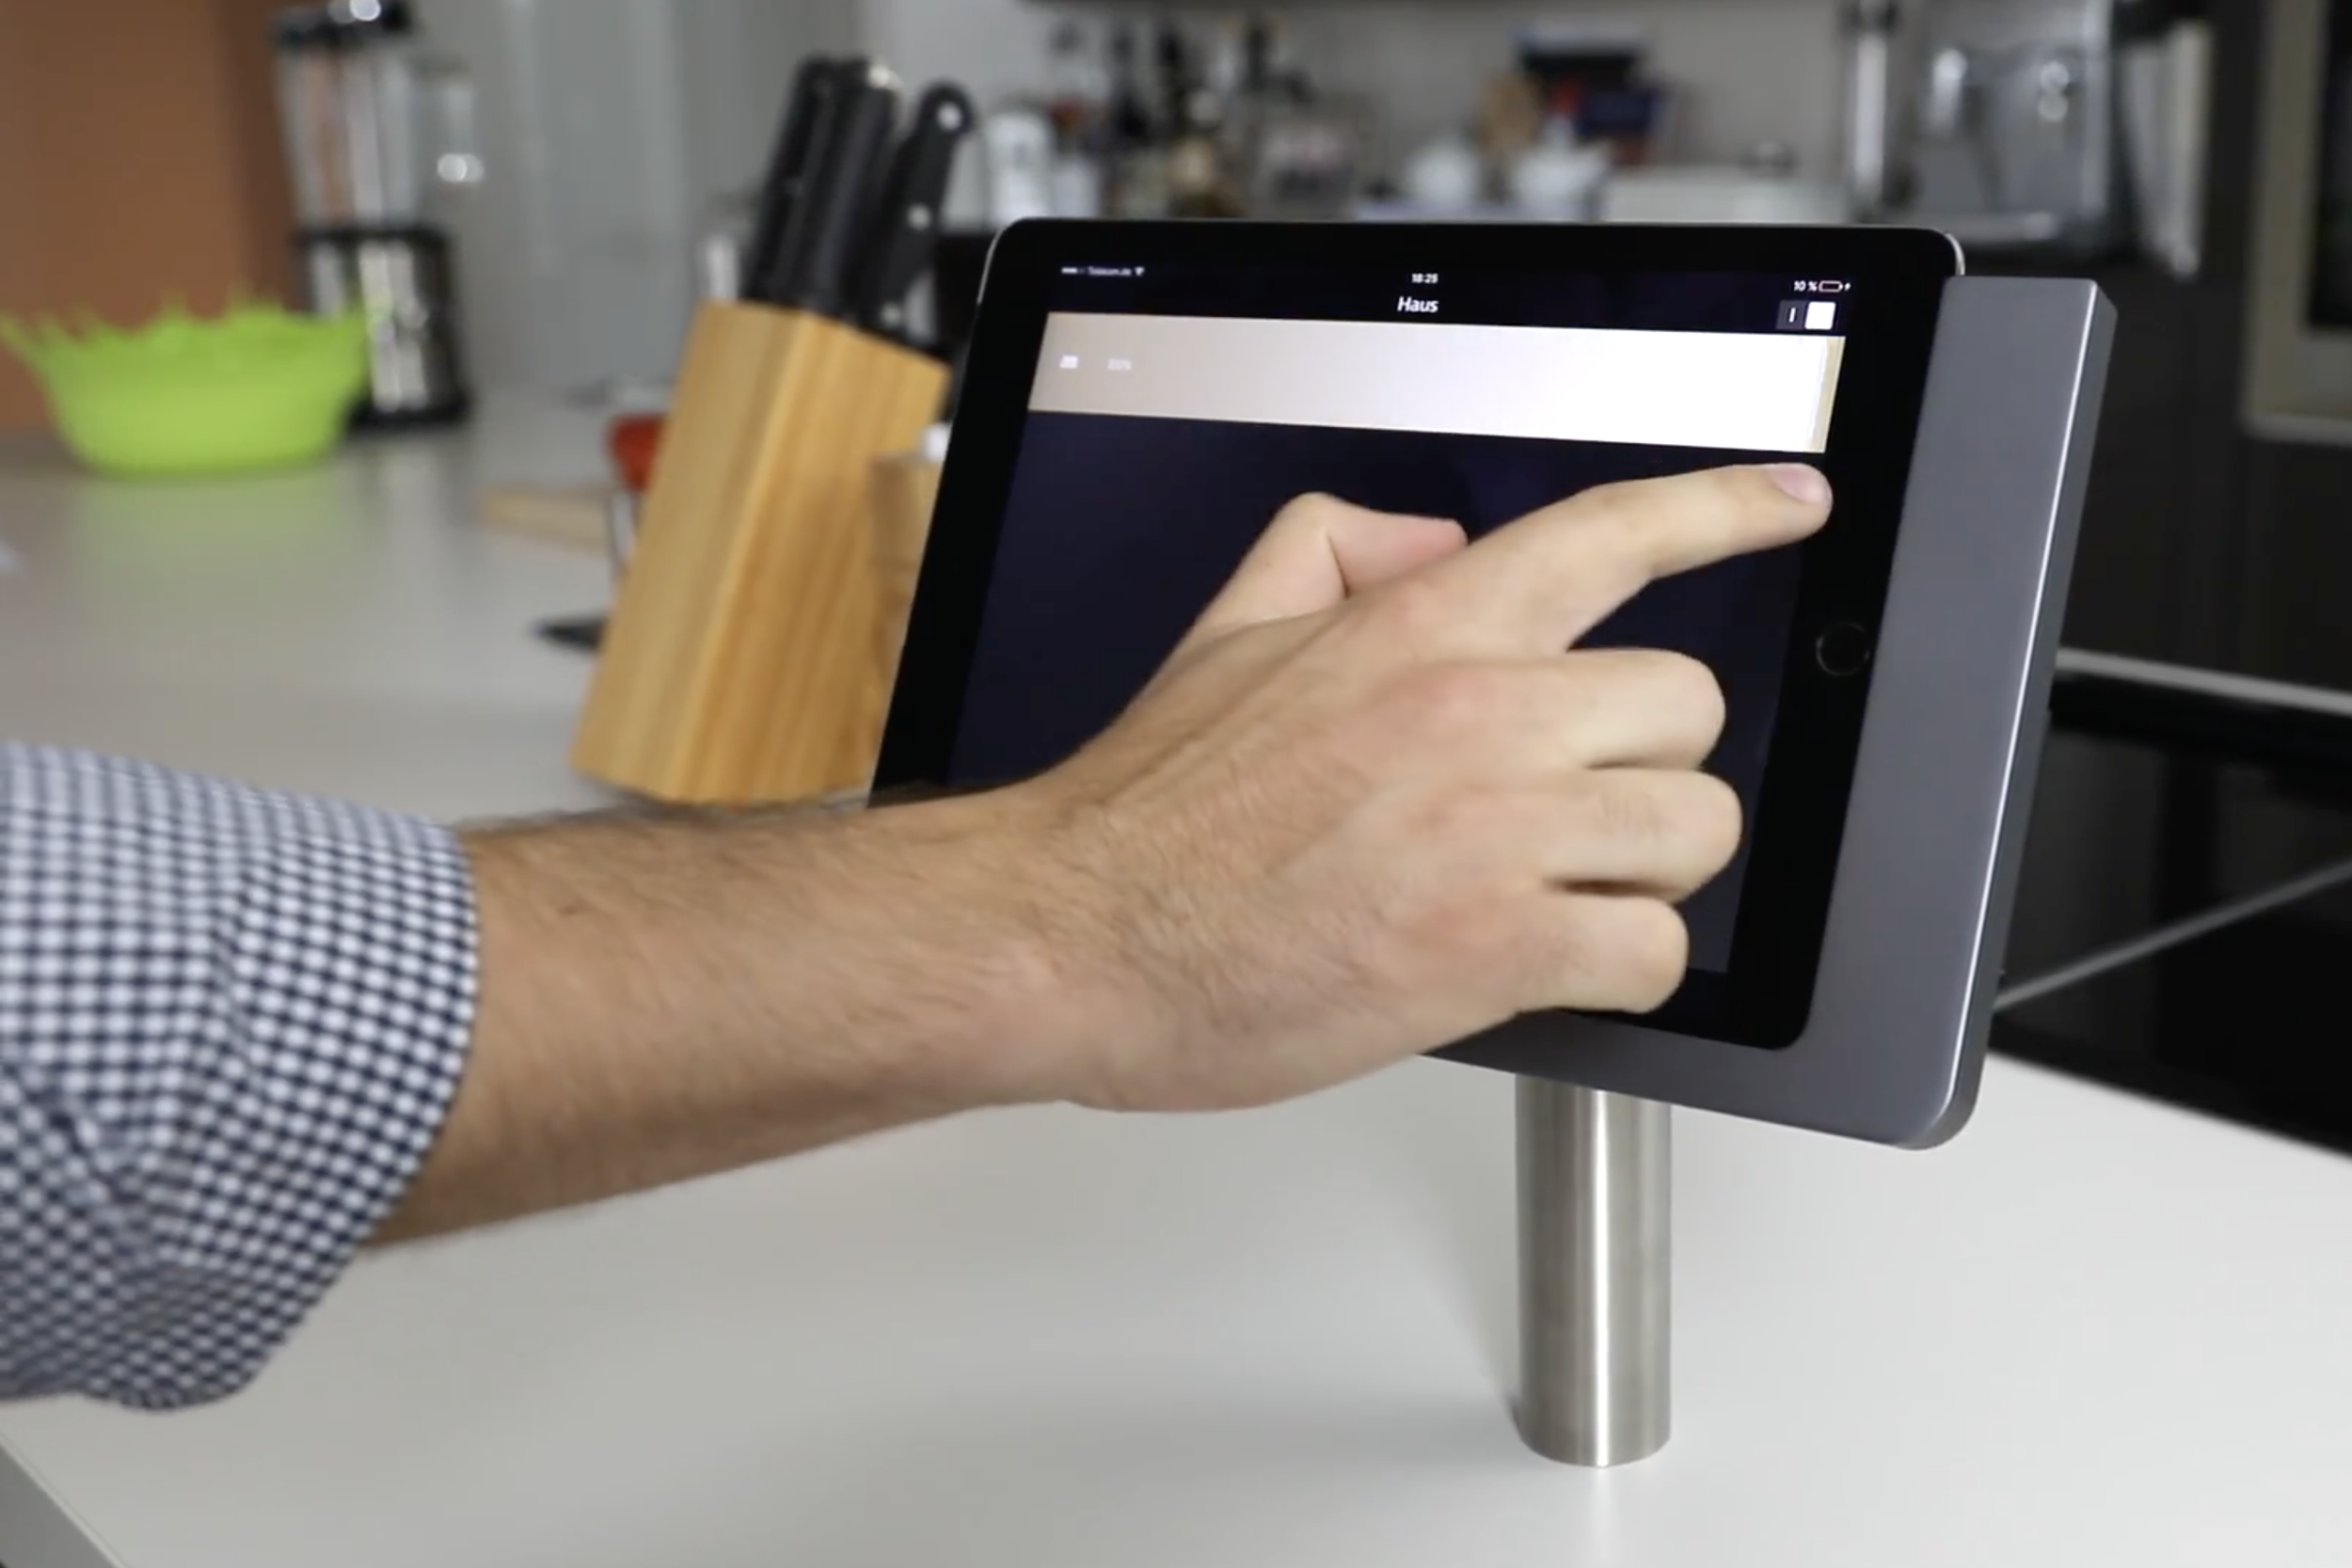 Apple iPad smart home hub dock rumored to be coming soon